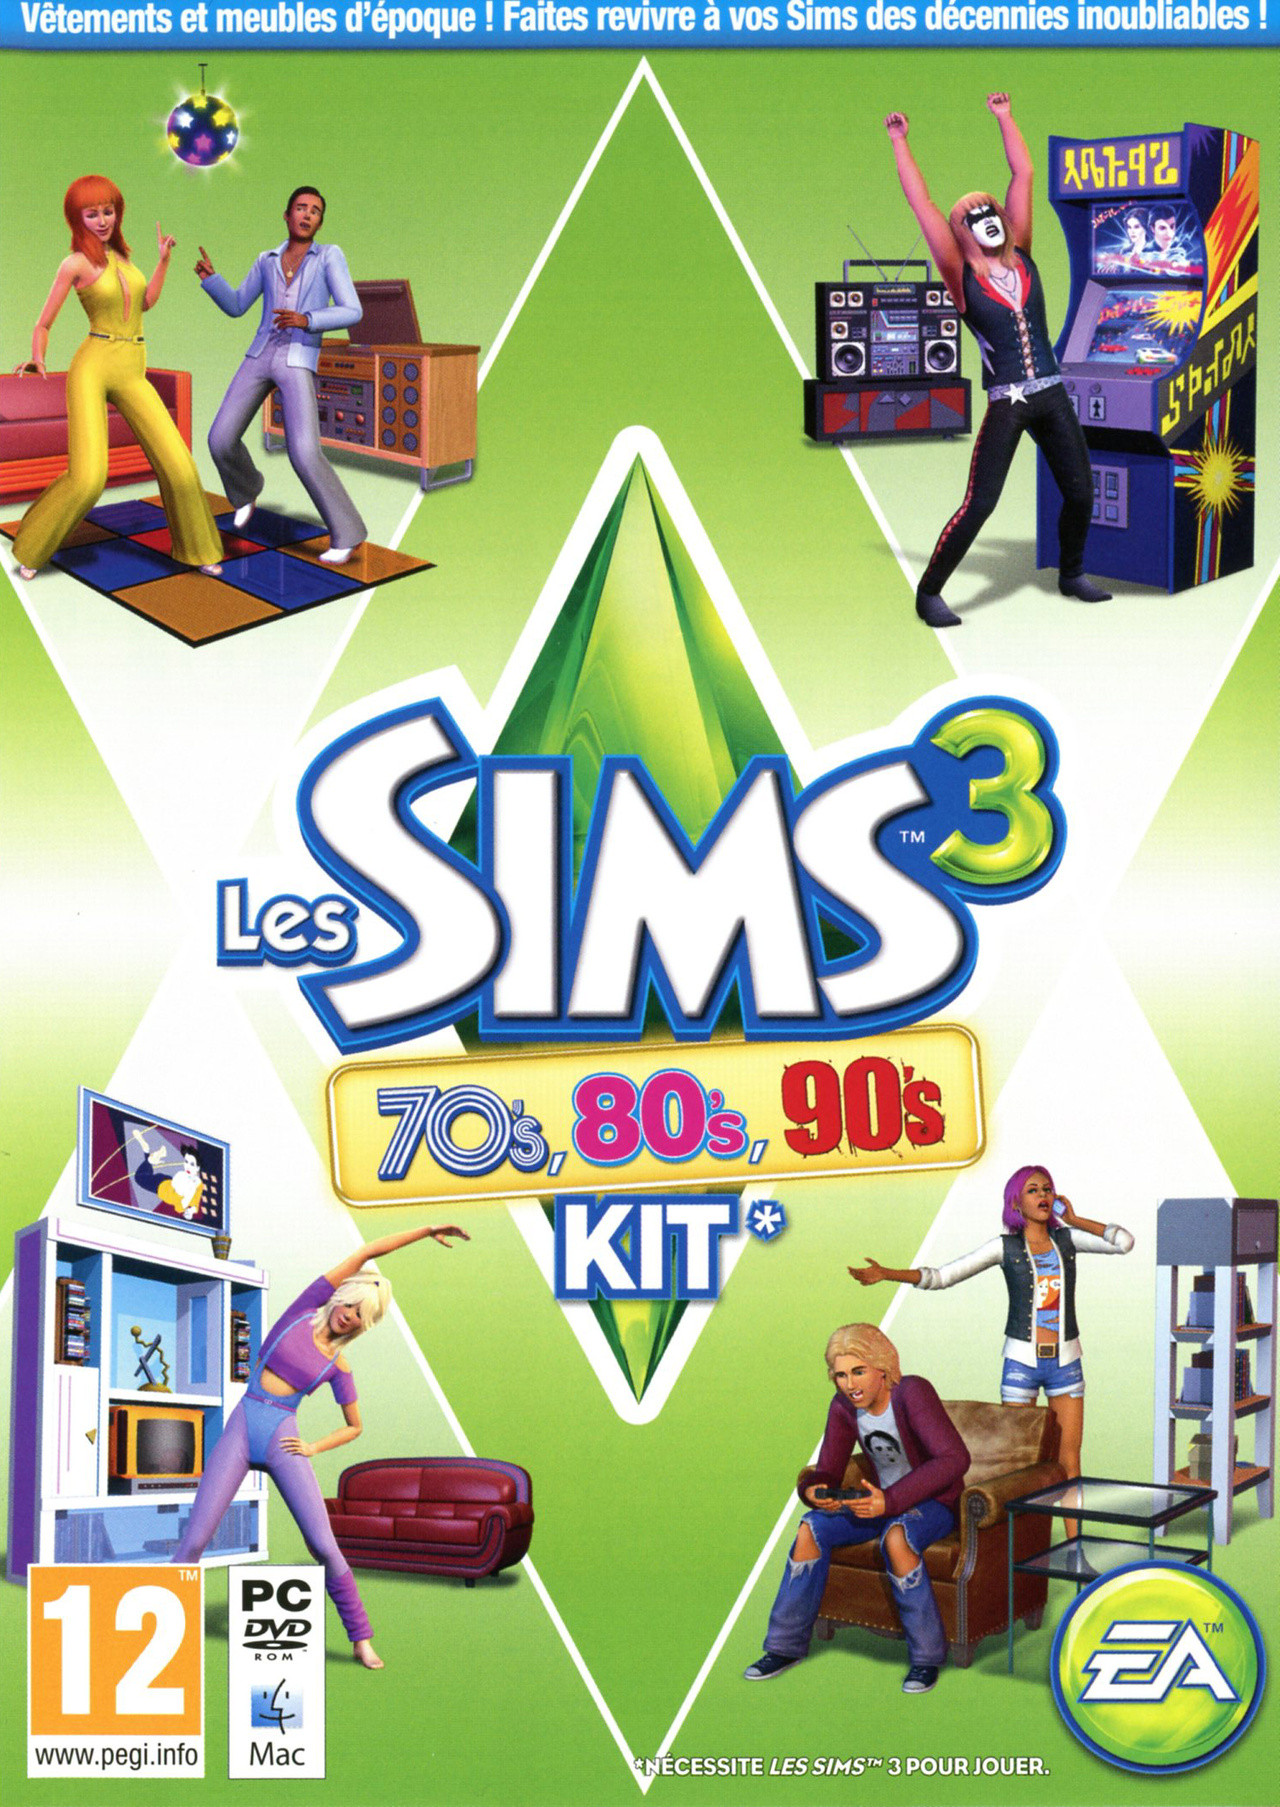 Sims 2 Stuff Packs Free S